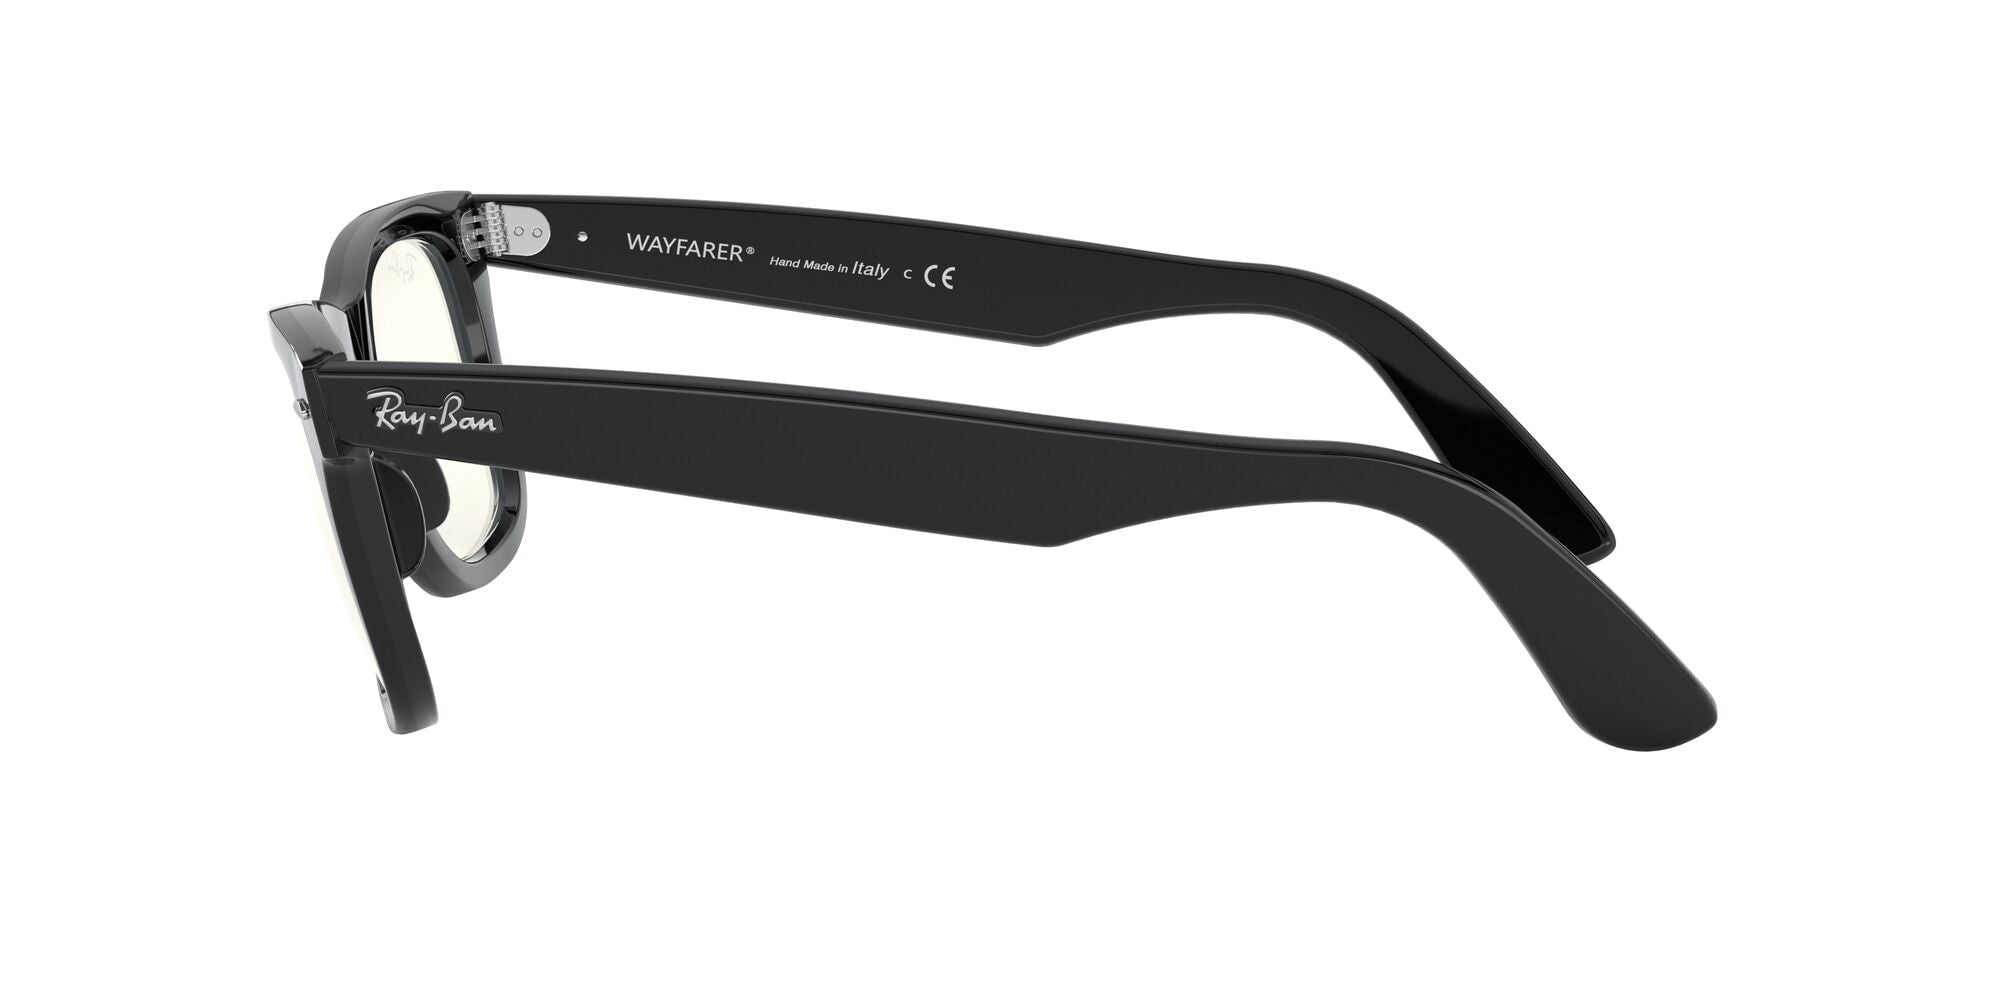 Ray Ban Wayfarer Clear Evolve Unisex Sunglasses RB2140 901/5F 50